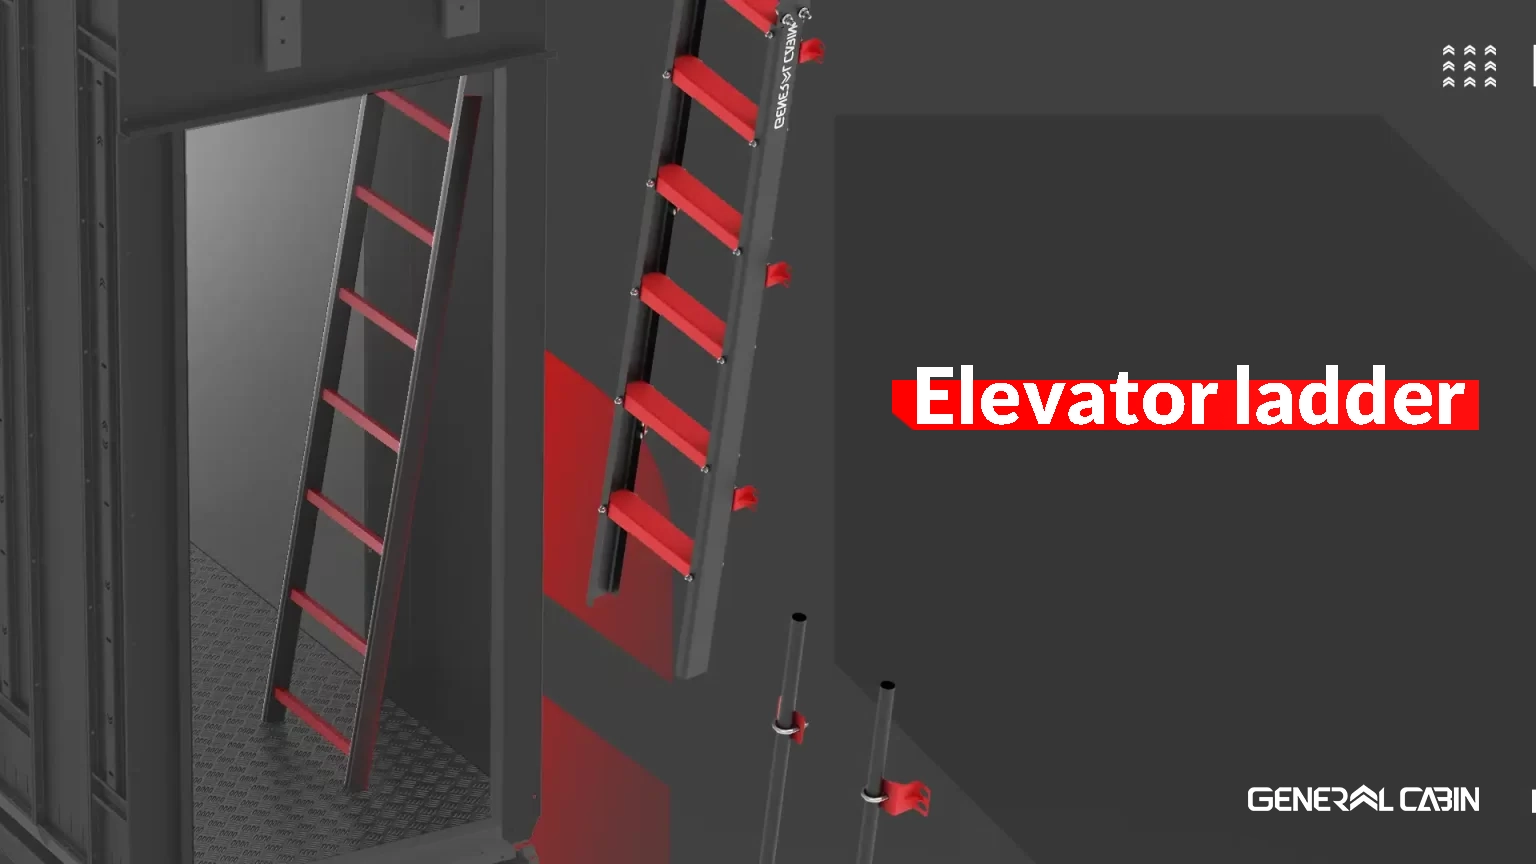 Elevator ladder